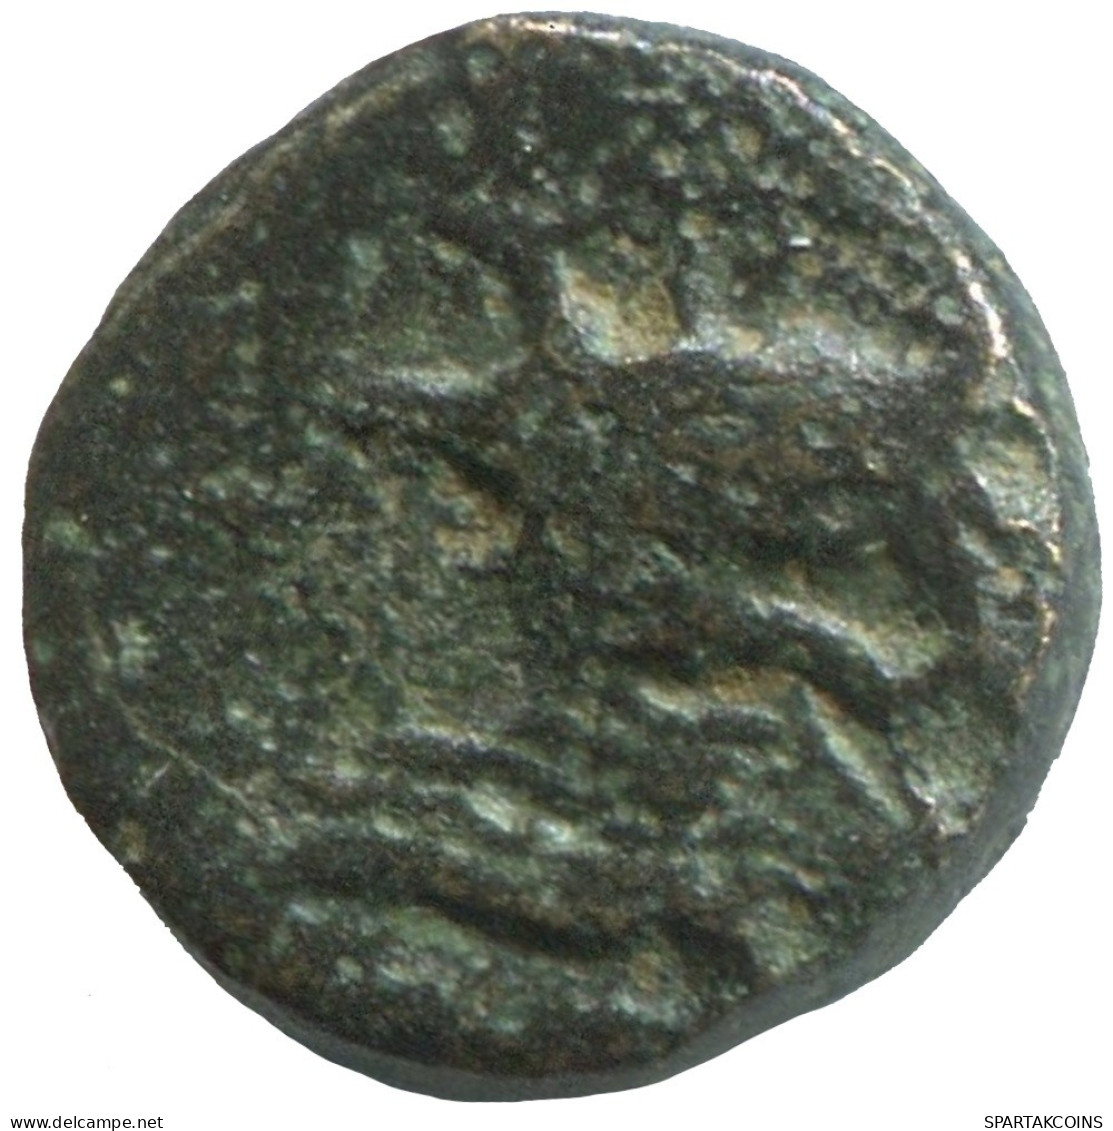 Ancient Antike Authentische Original GRIECHISCHE Münze 1.3g/10mm #SAV1319.11.D.A - Grecques